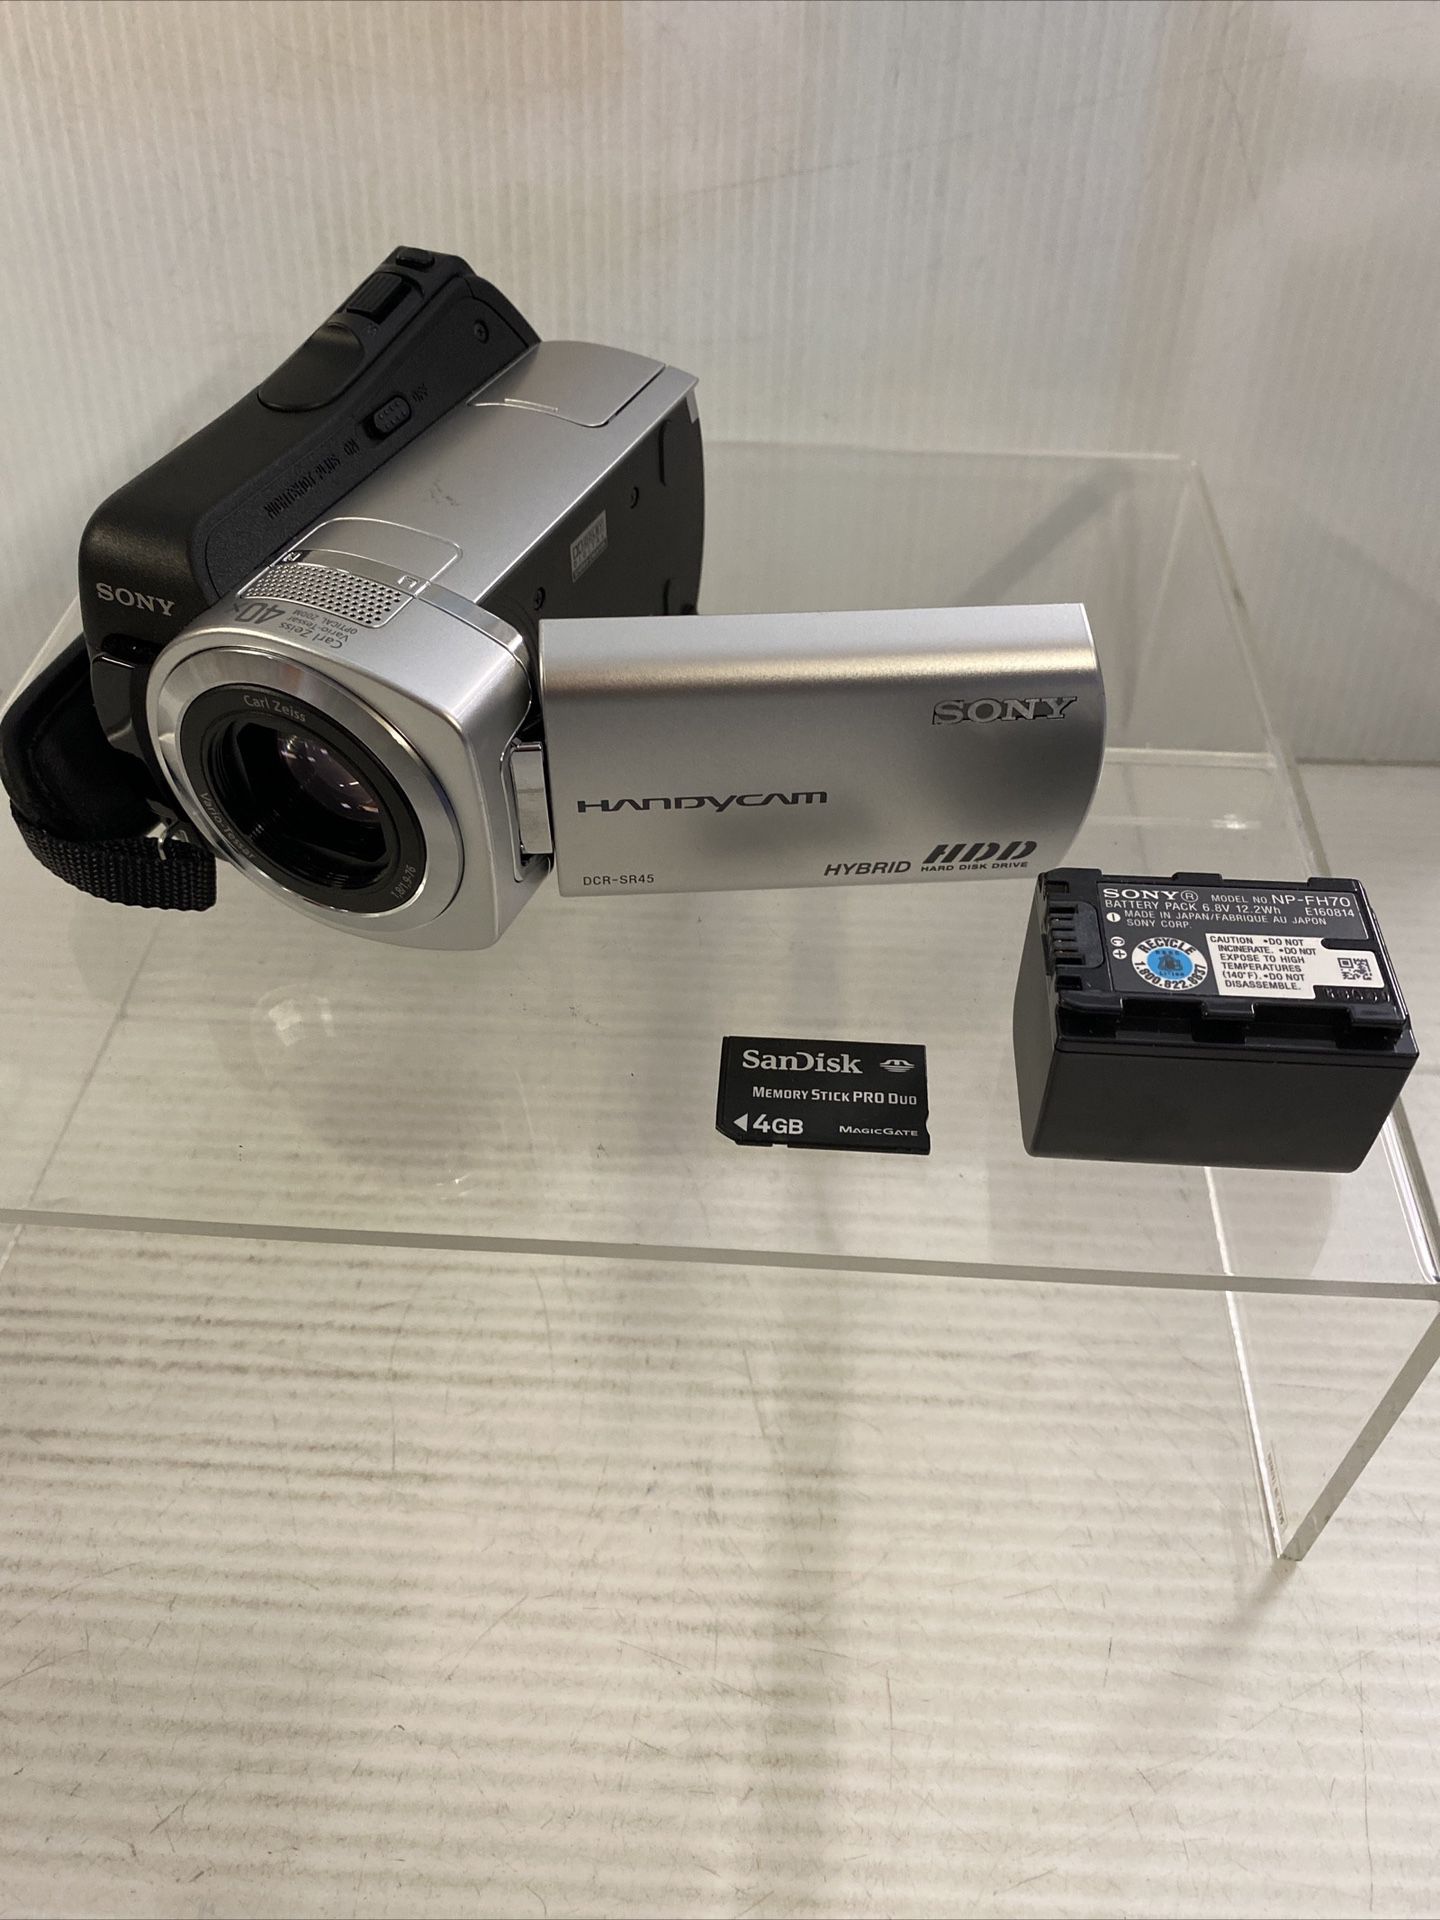 SONY DCR-SR45 Handycam Digital Video Camera / Camcorder - Nightshot - Excellent